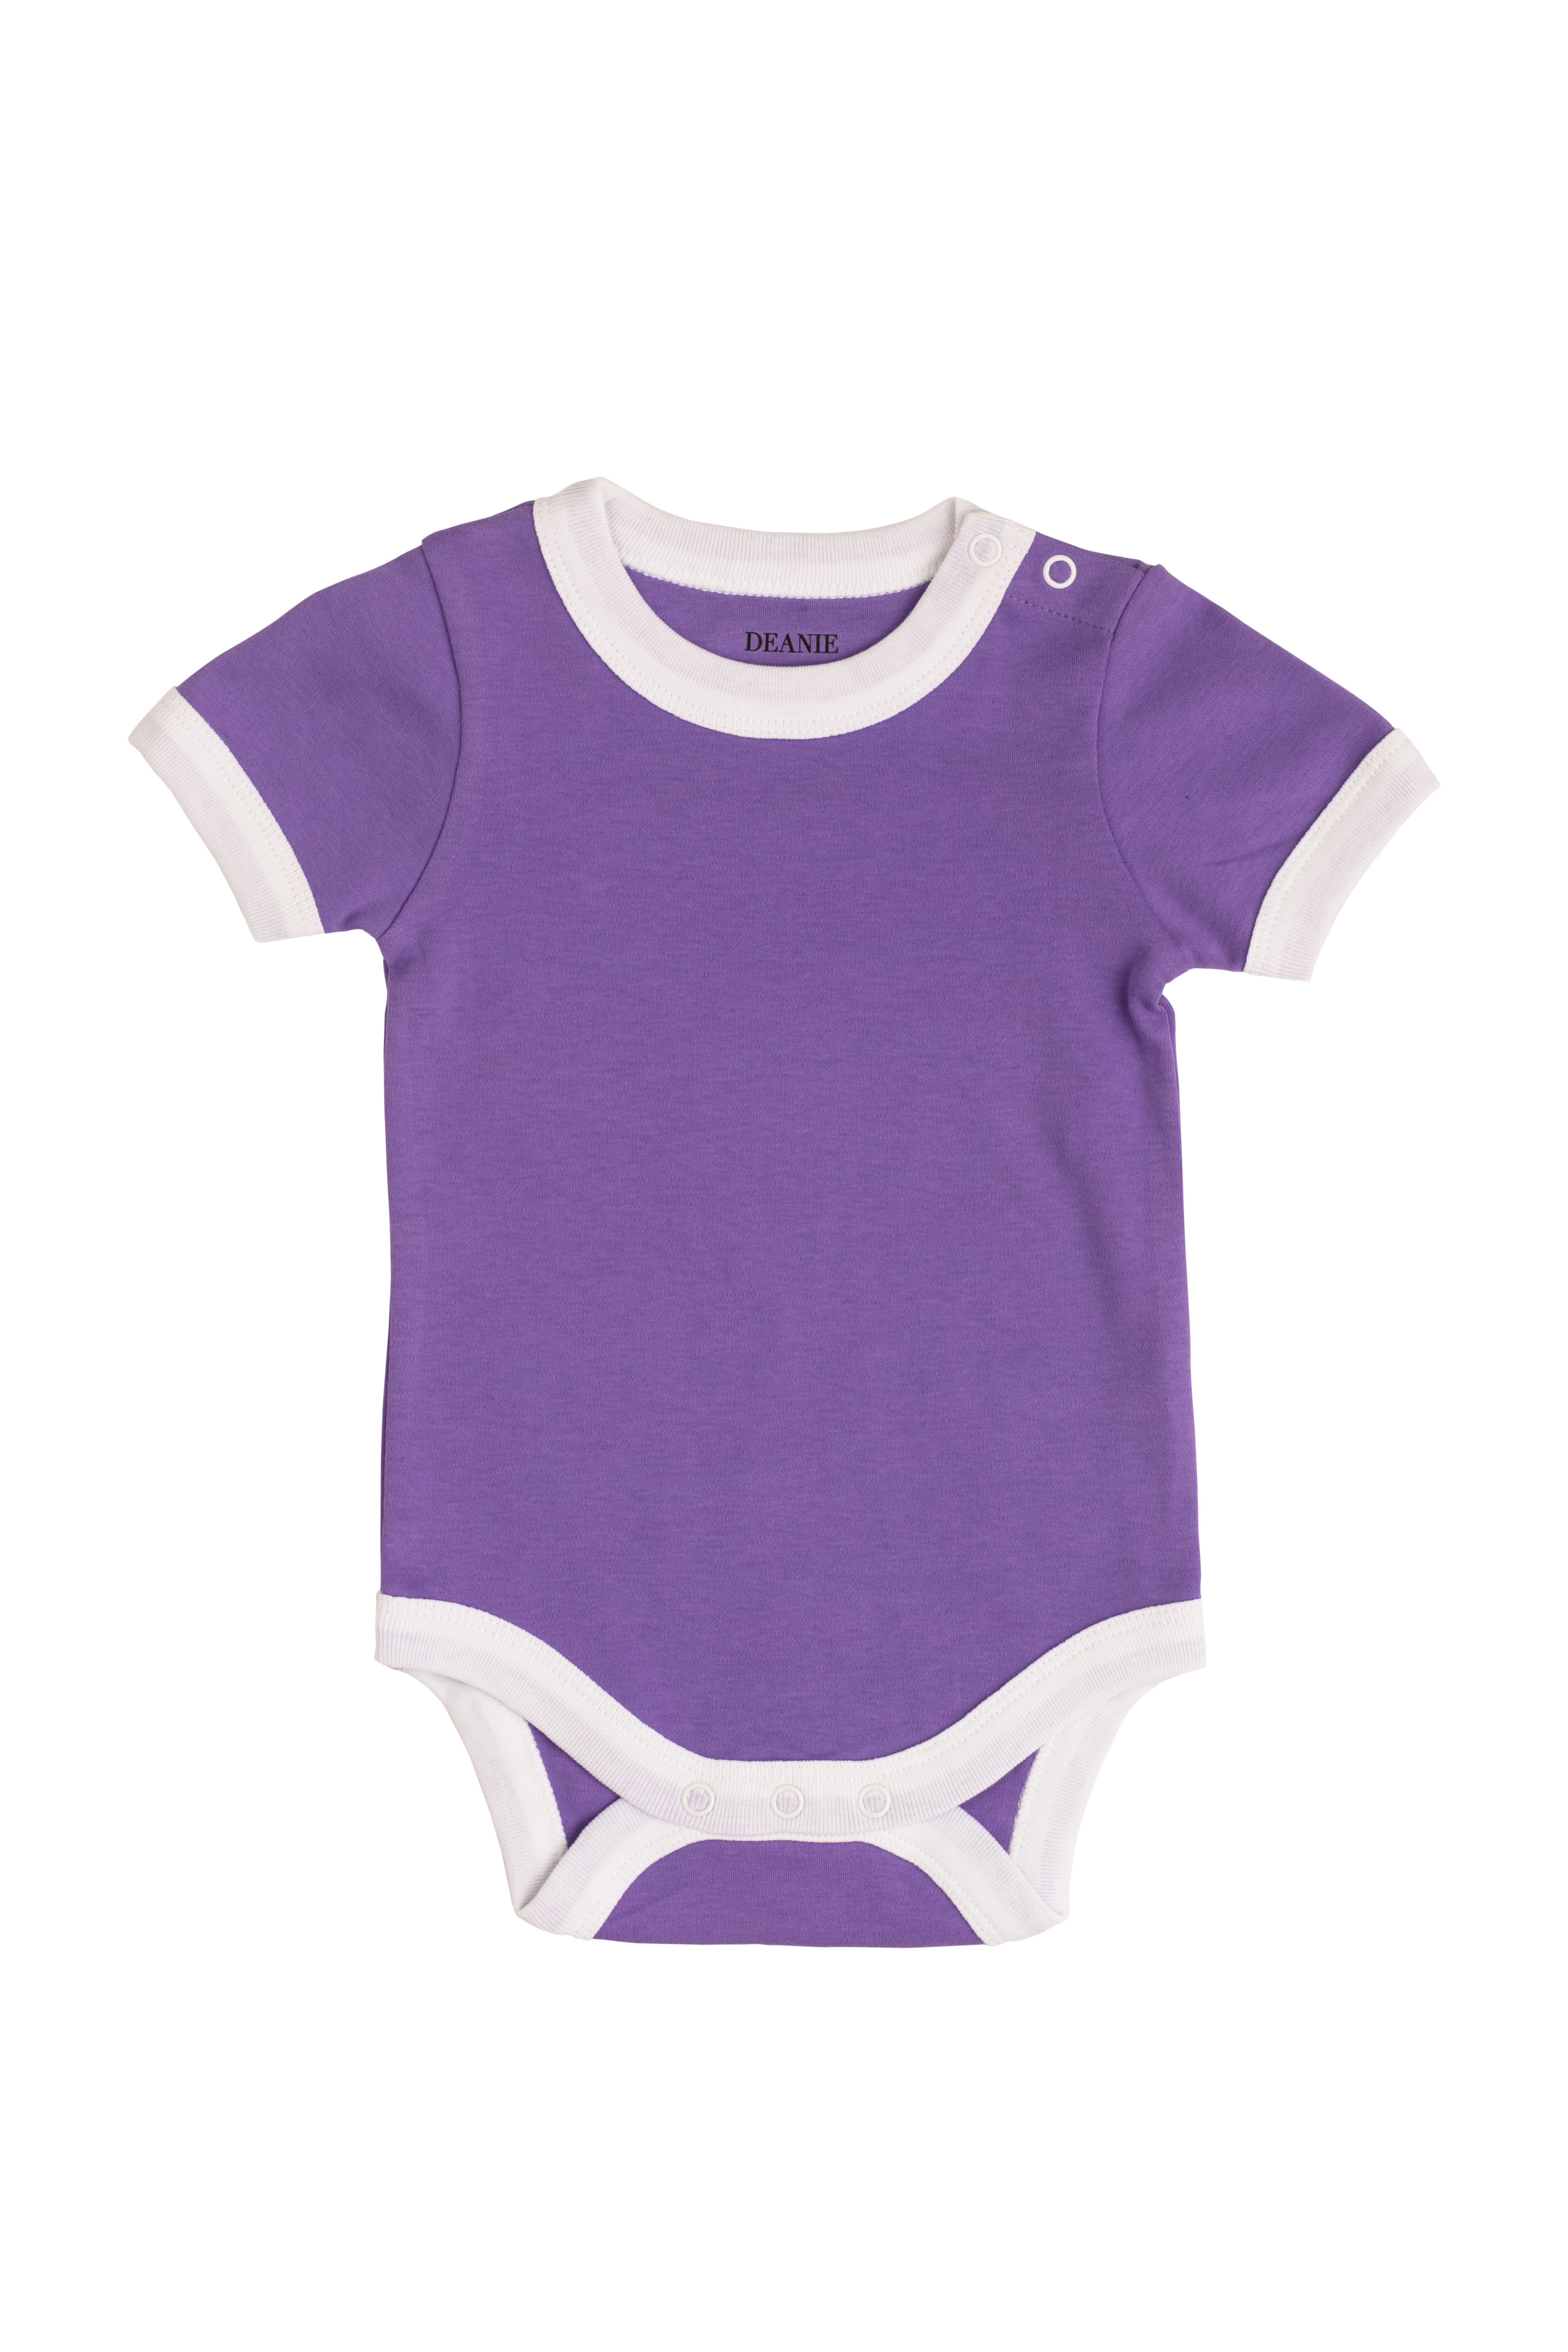 DEANIE ORGANIC BABY ® Purple - Deanie